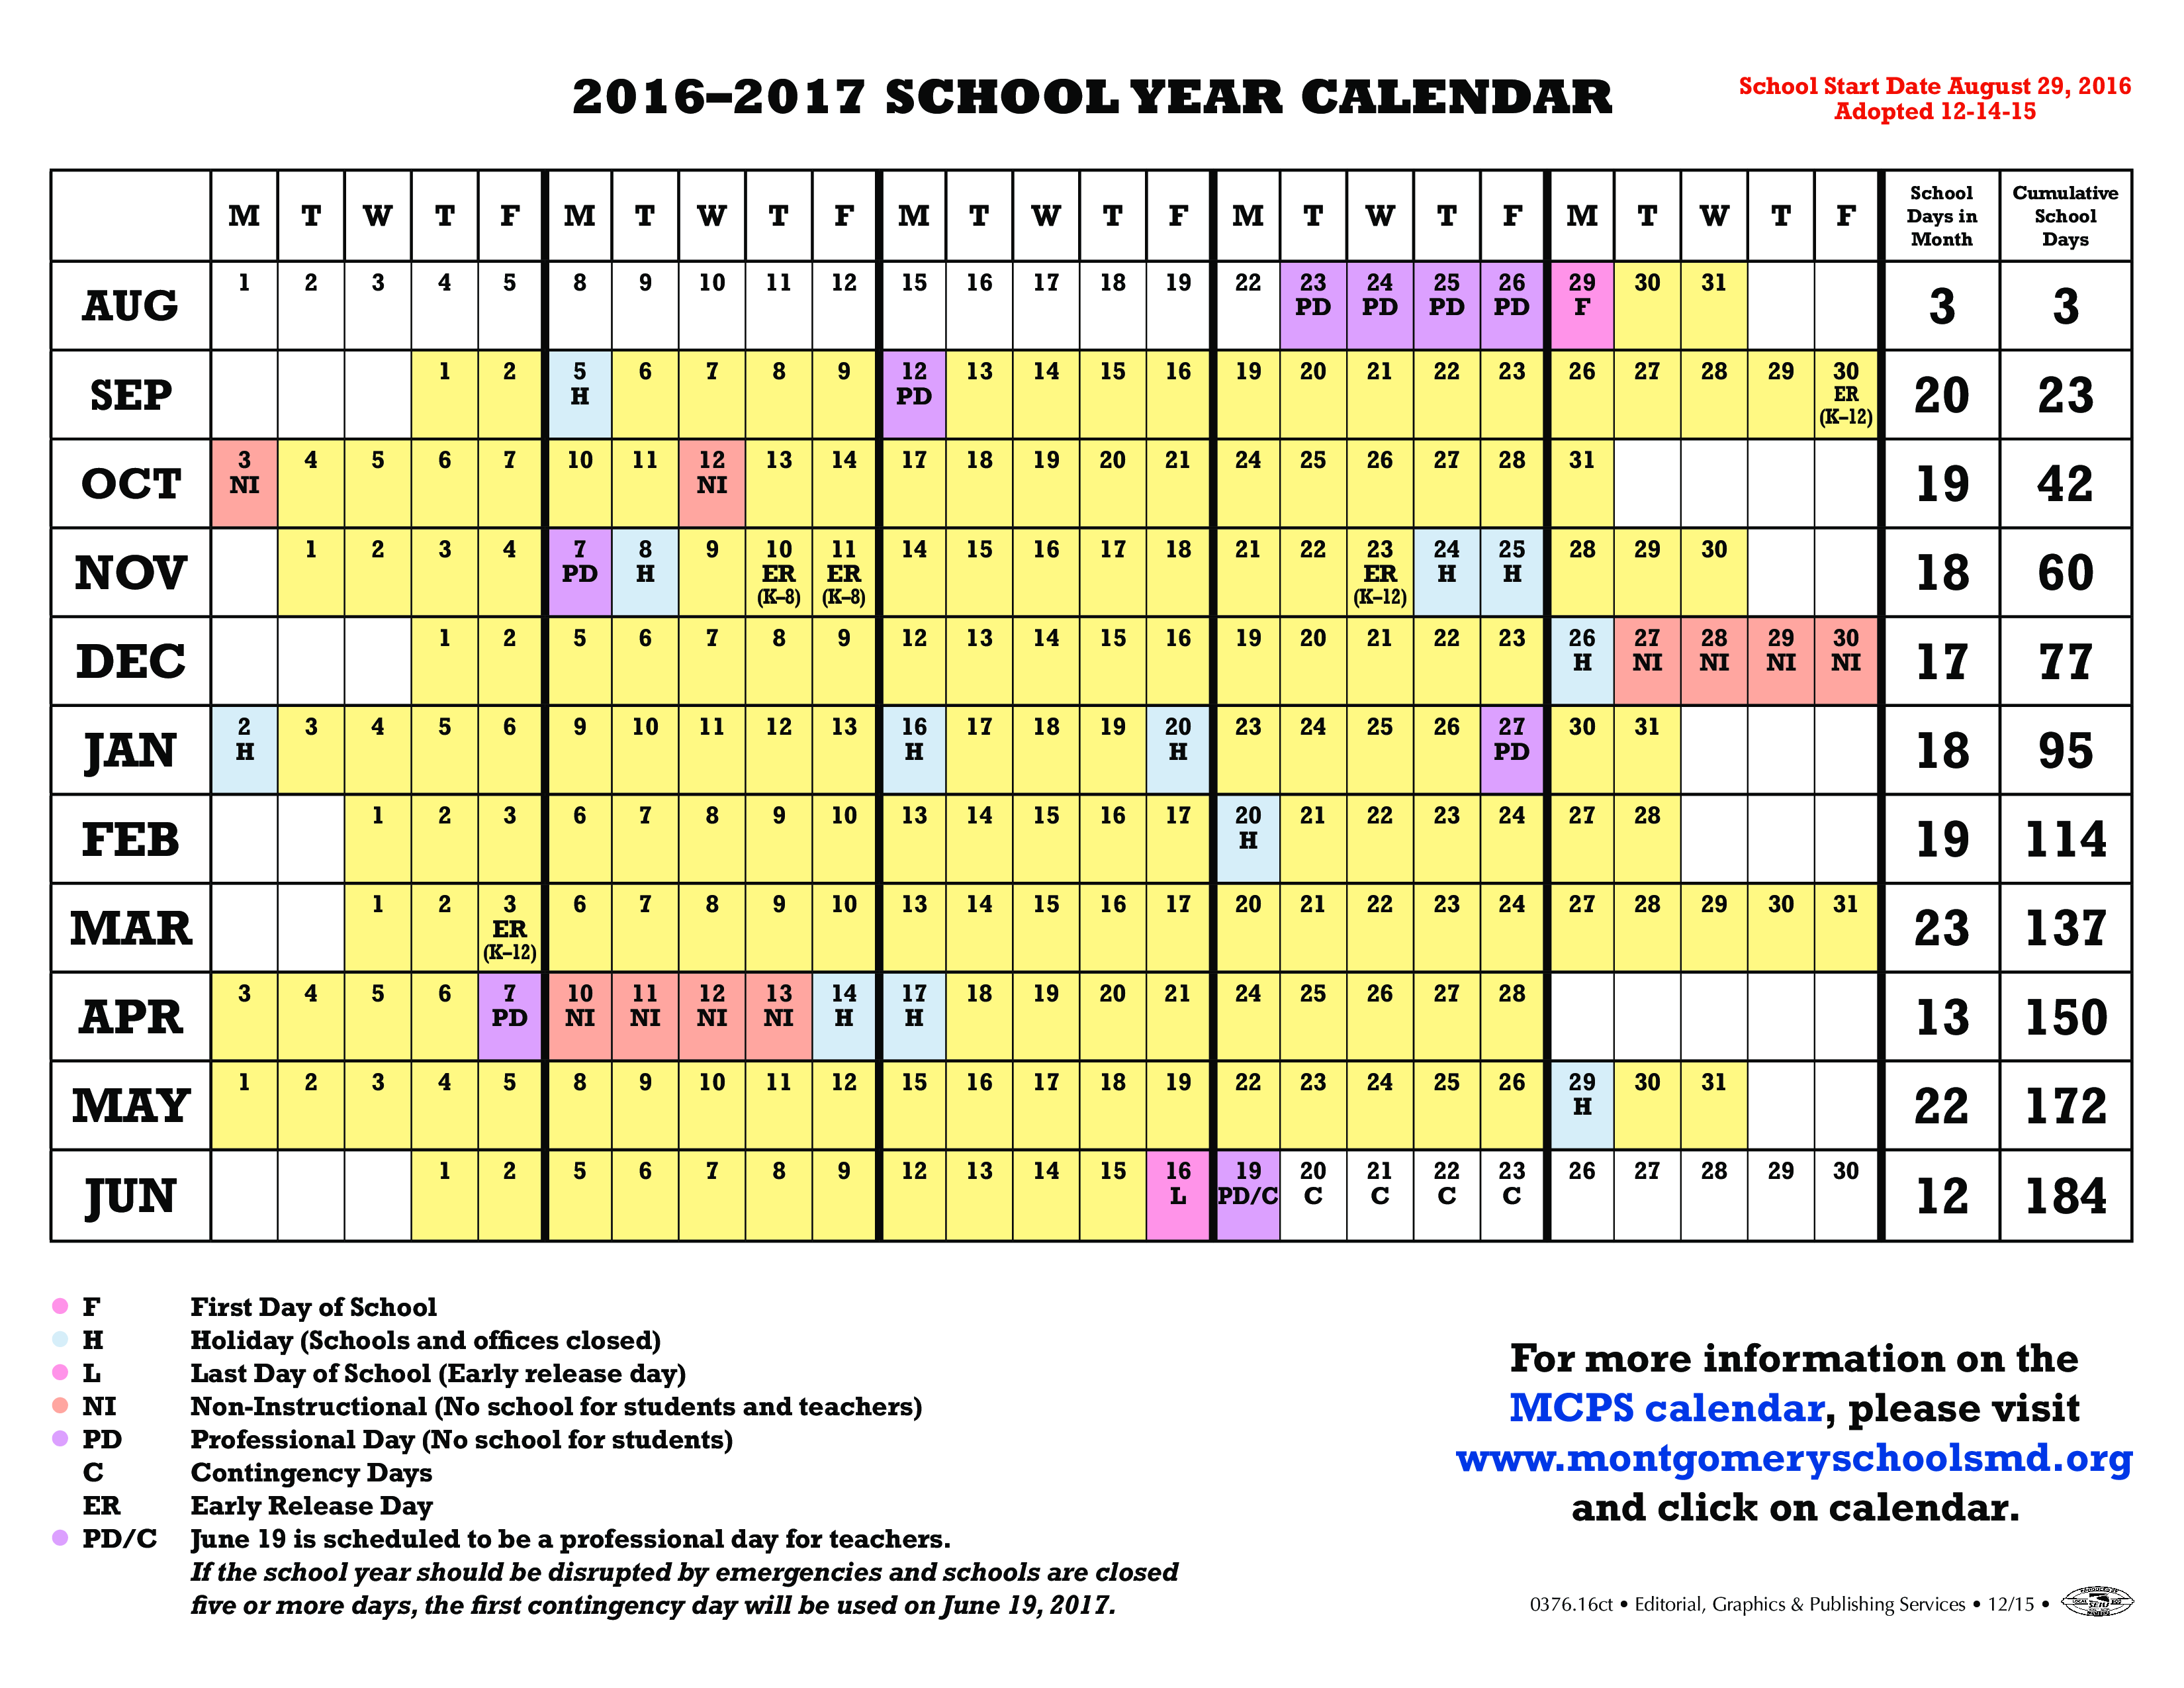 blank yearly calendar templates at allbusinesstemplatescom